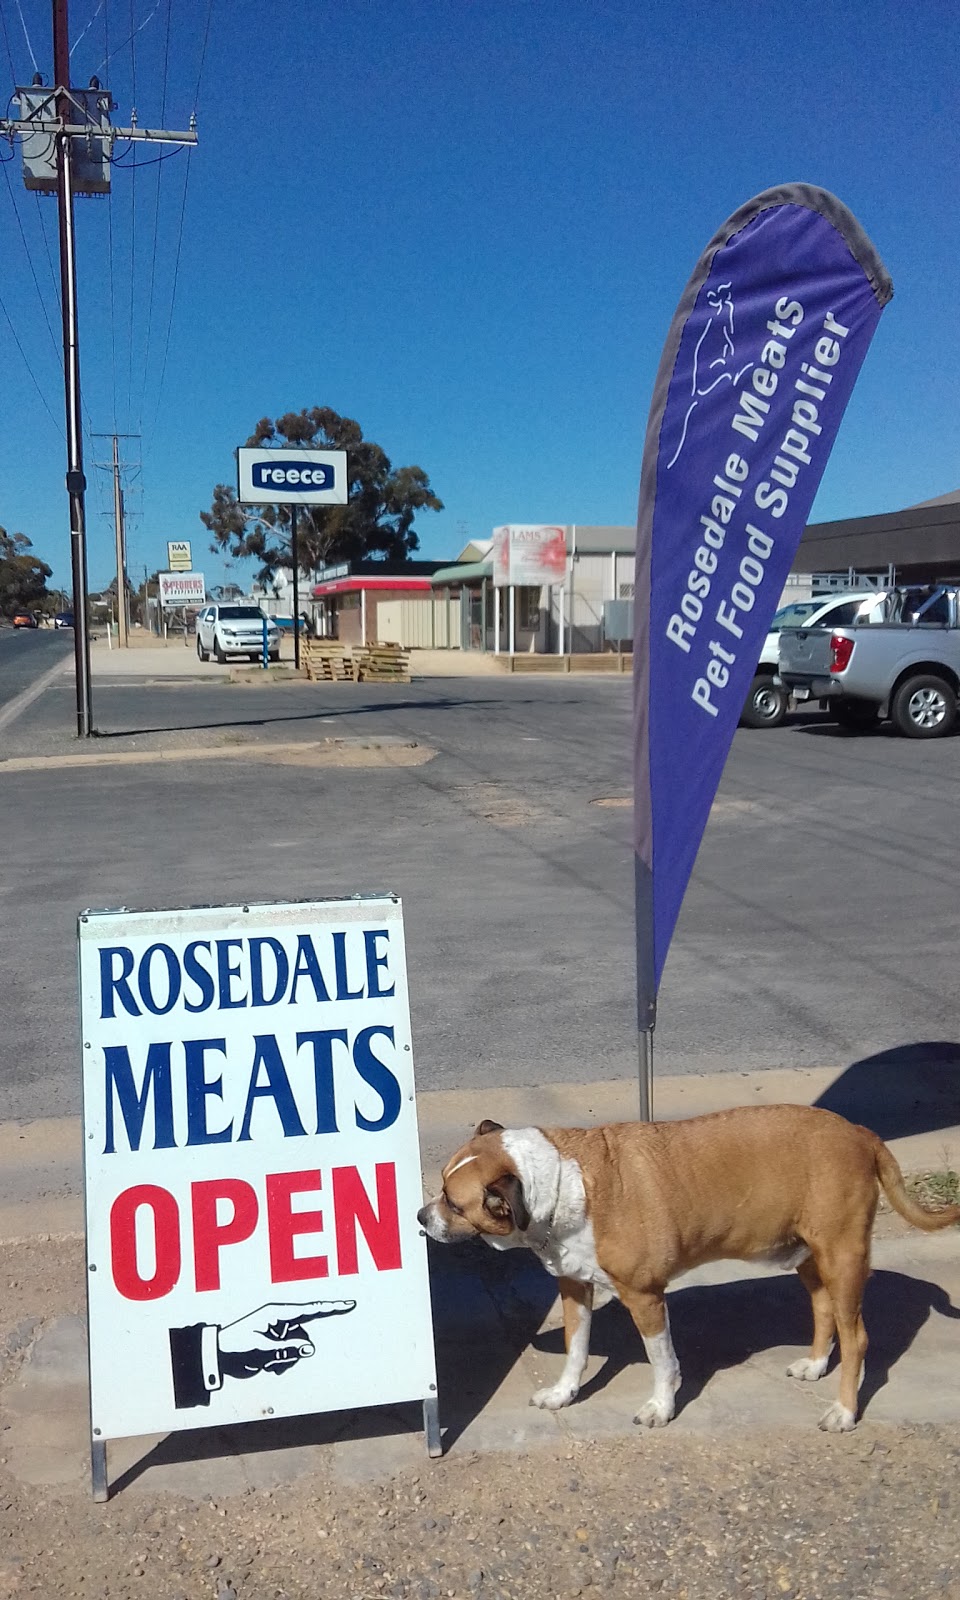 Rosedale Meats Pet Food Specialists |  | 35 Jellett Rd, Berri SA 5343, Australia | 0885825070 OR +61 8 8582 5070